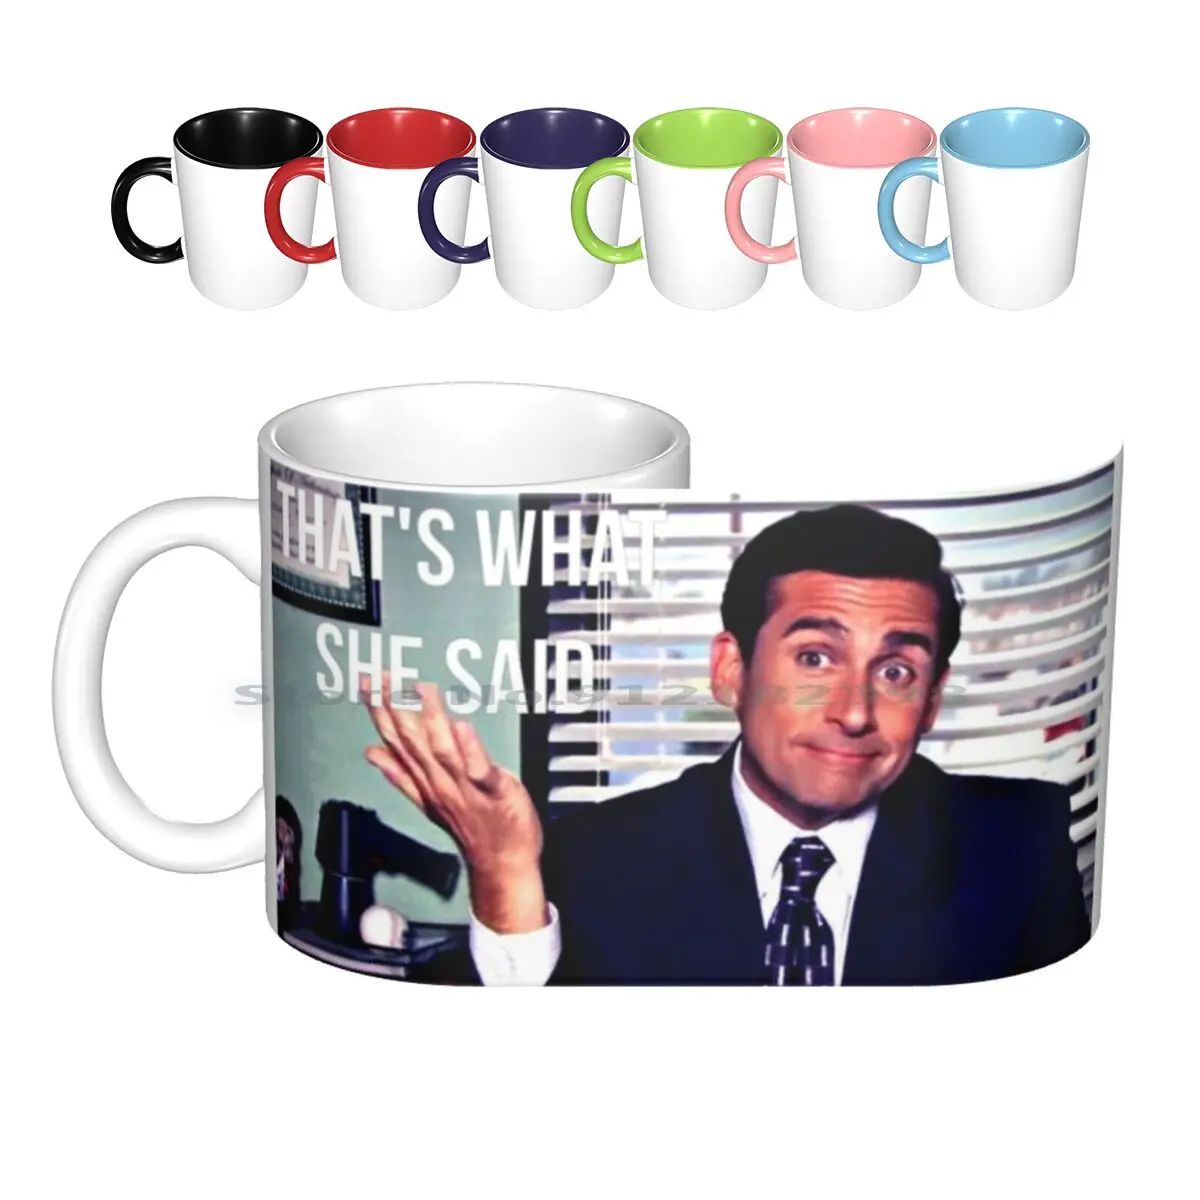 

That's What She Said Ceramic Mugs Coffee Cups Milk Tea Mug Thats What She Said Funny The Office Office Dwight Michael Man Jim